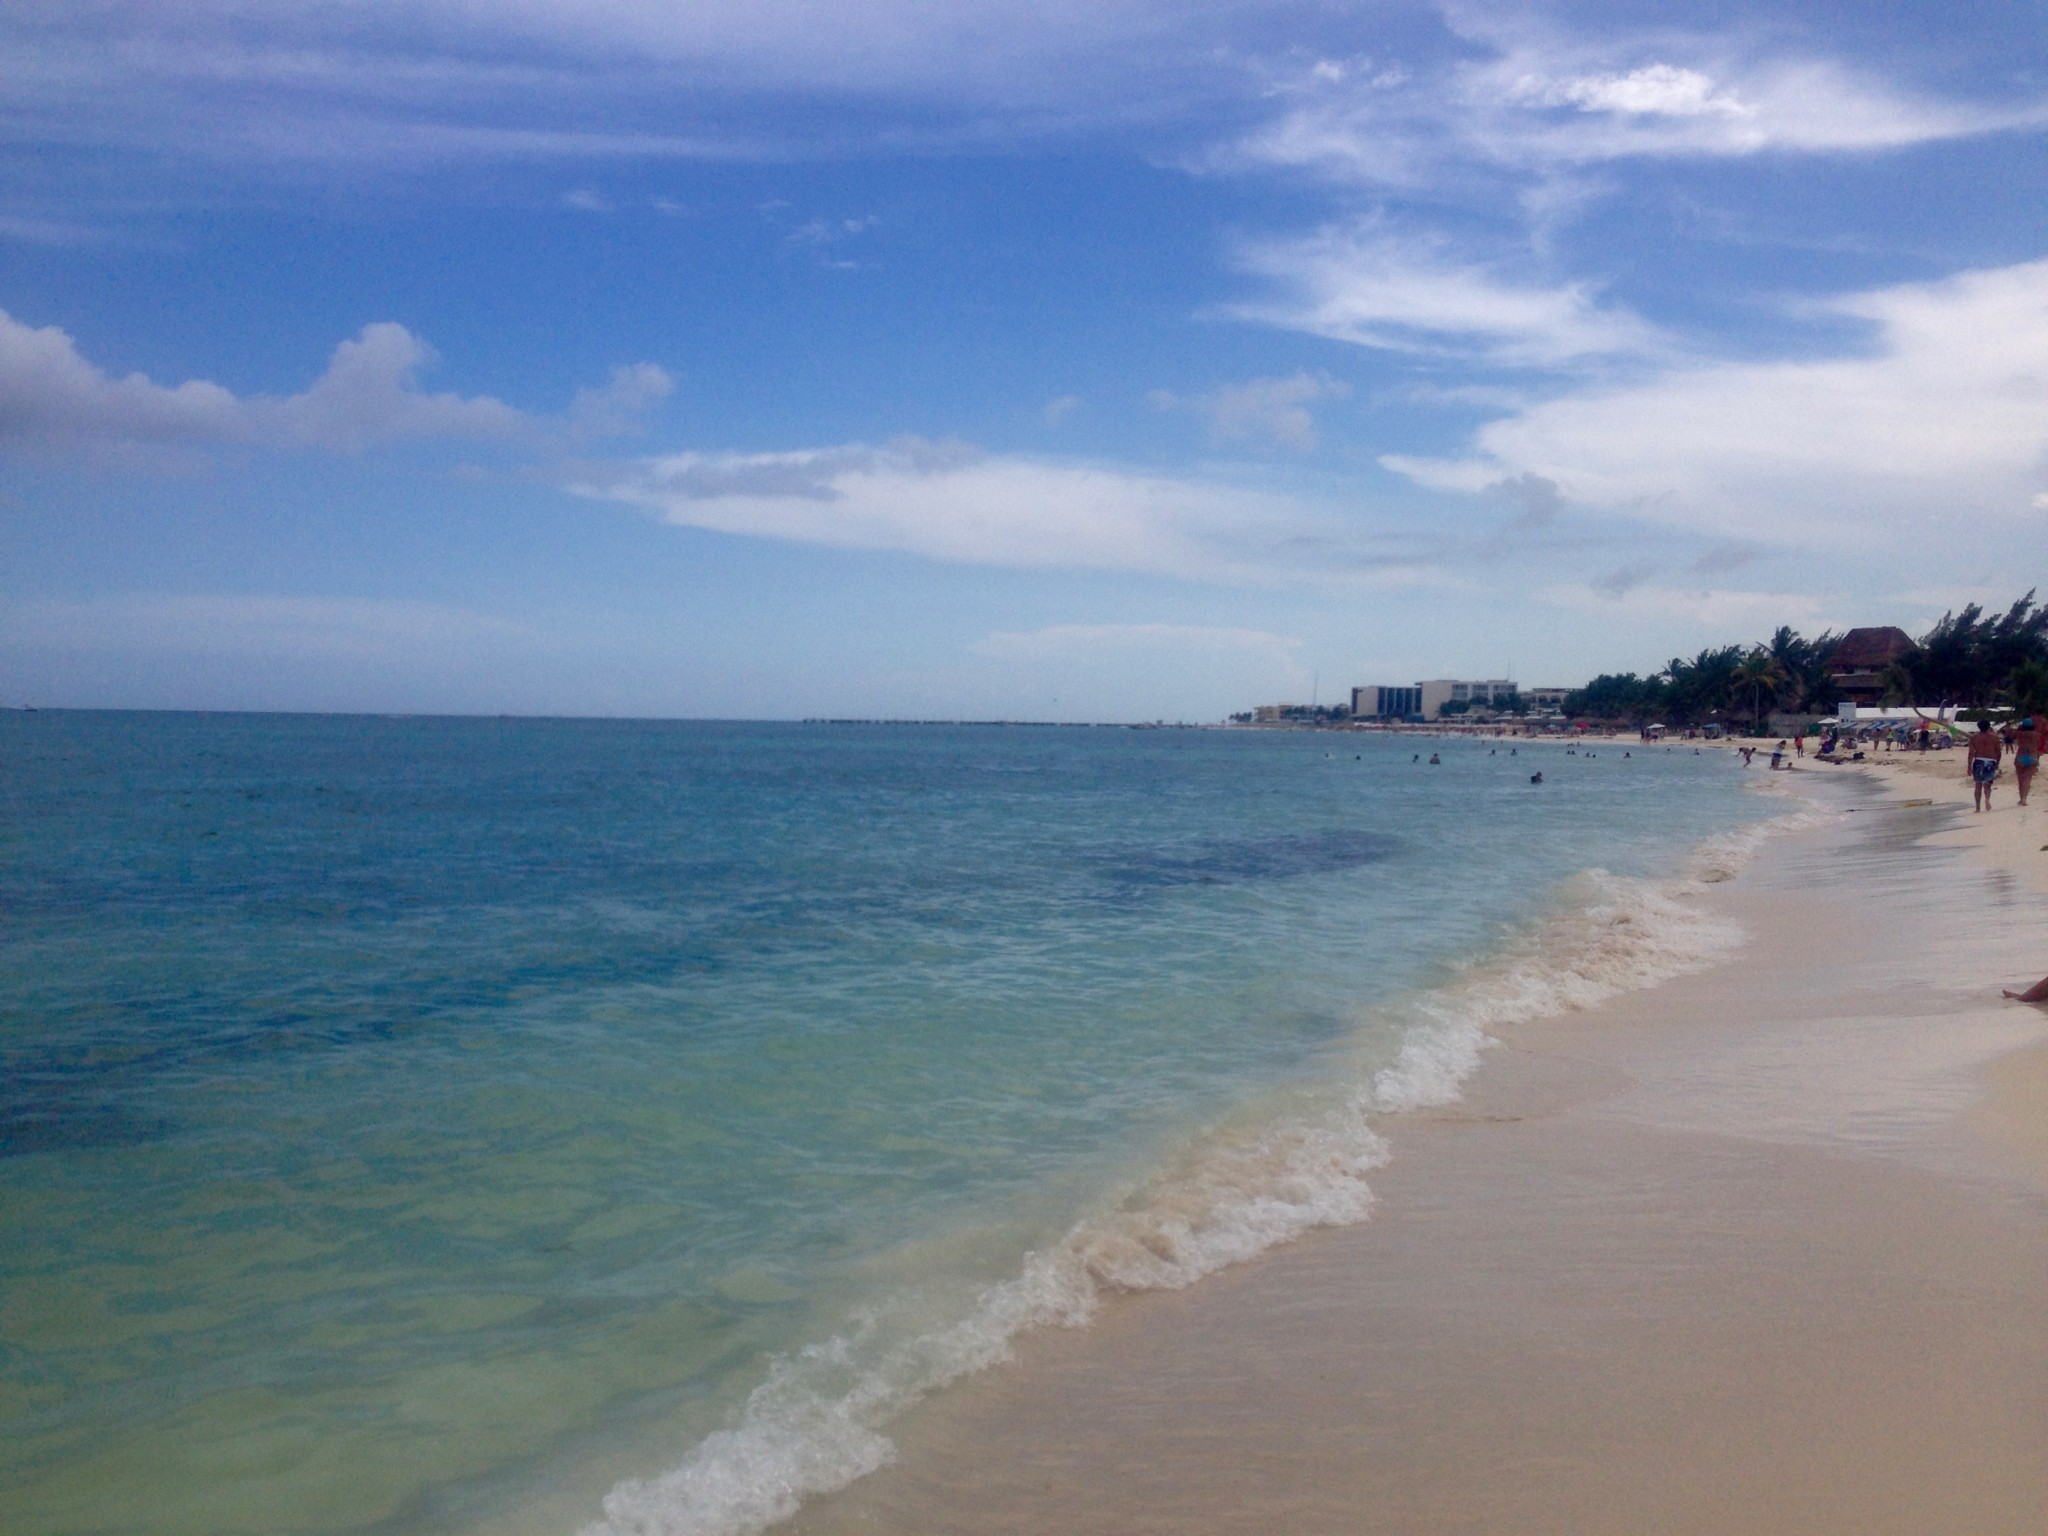 Playa Del Carmen Beach - Things to do in Playa Del Carmen